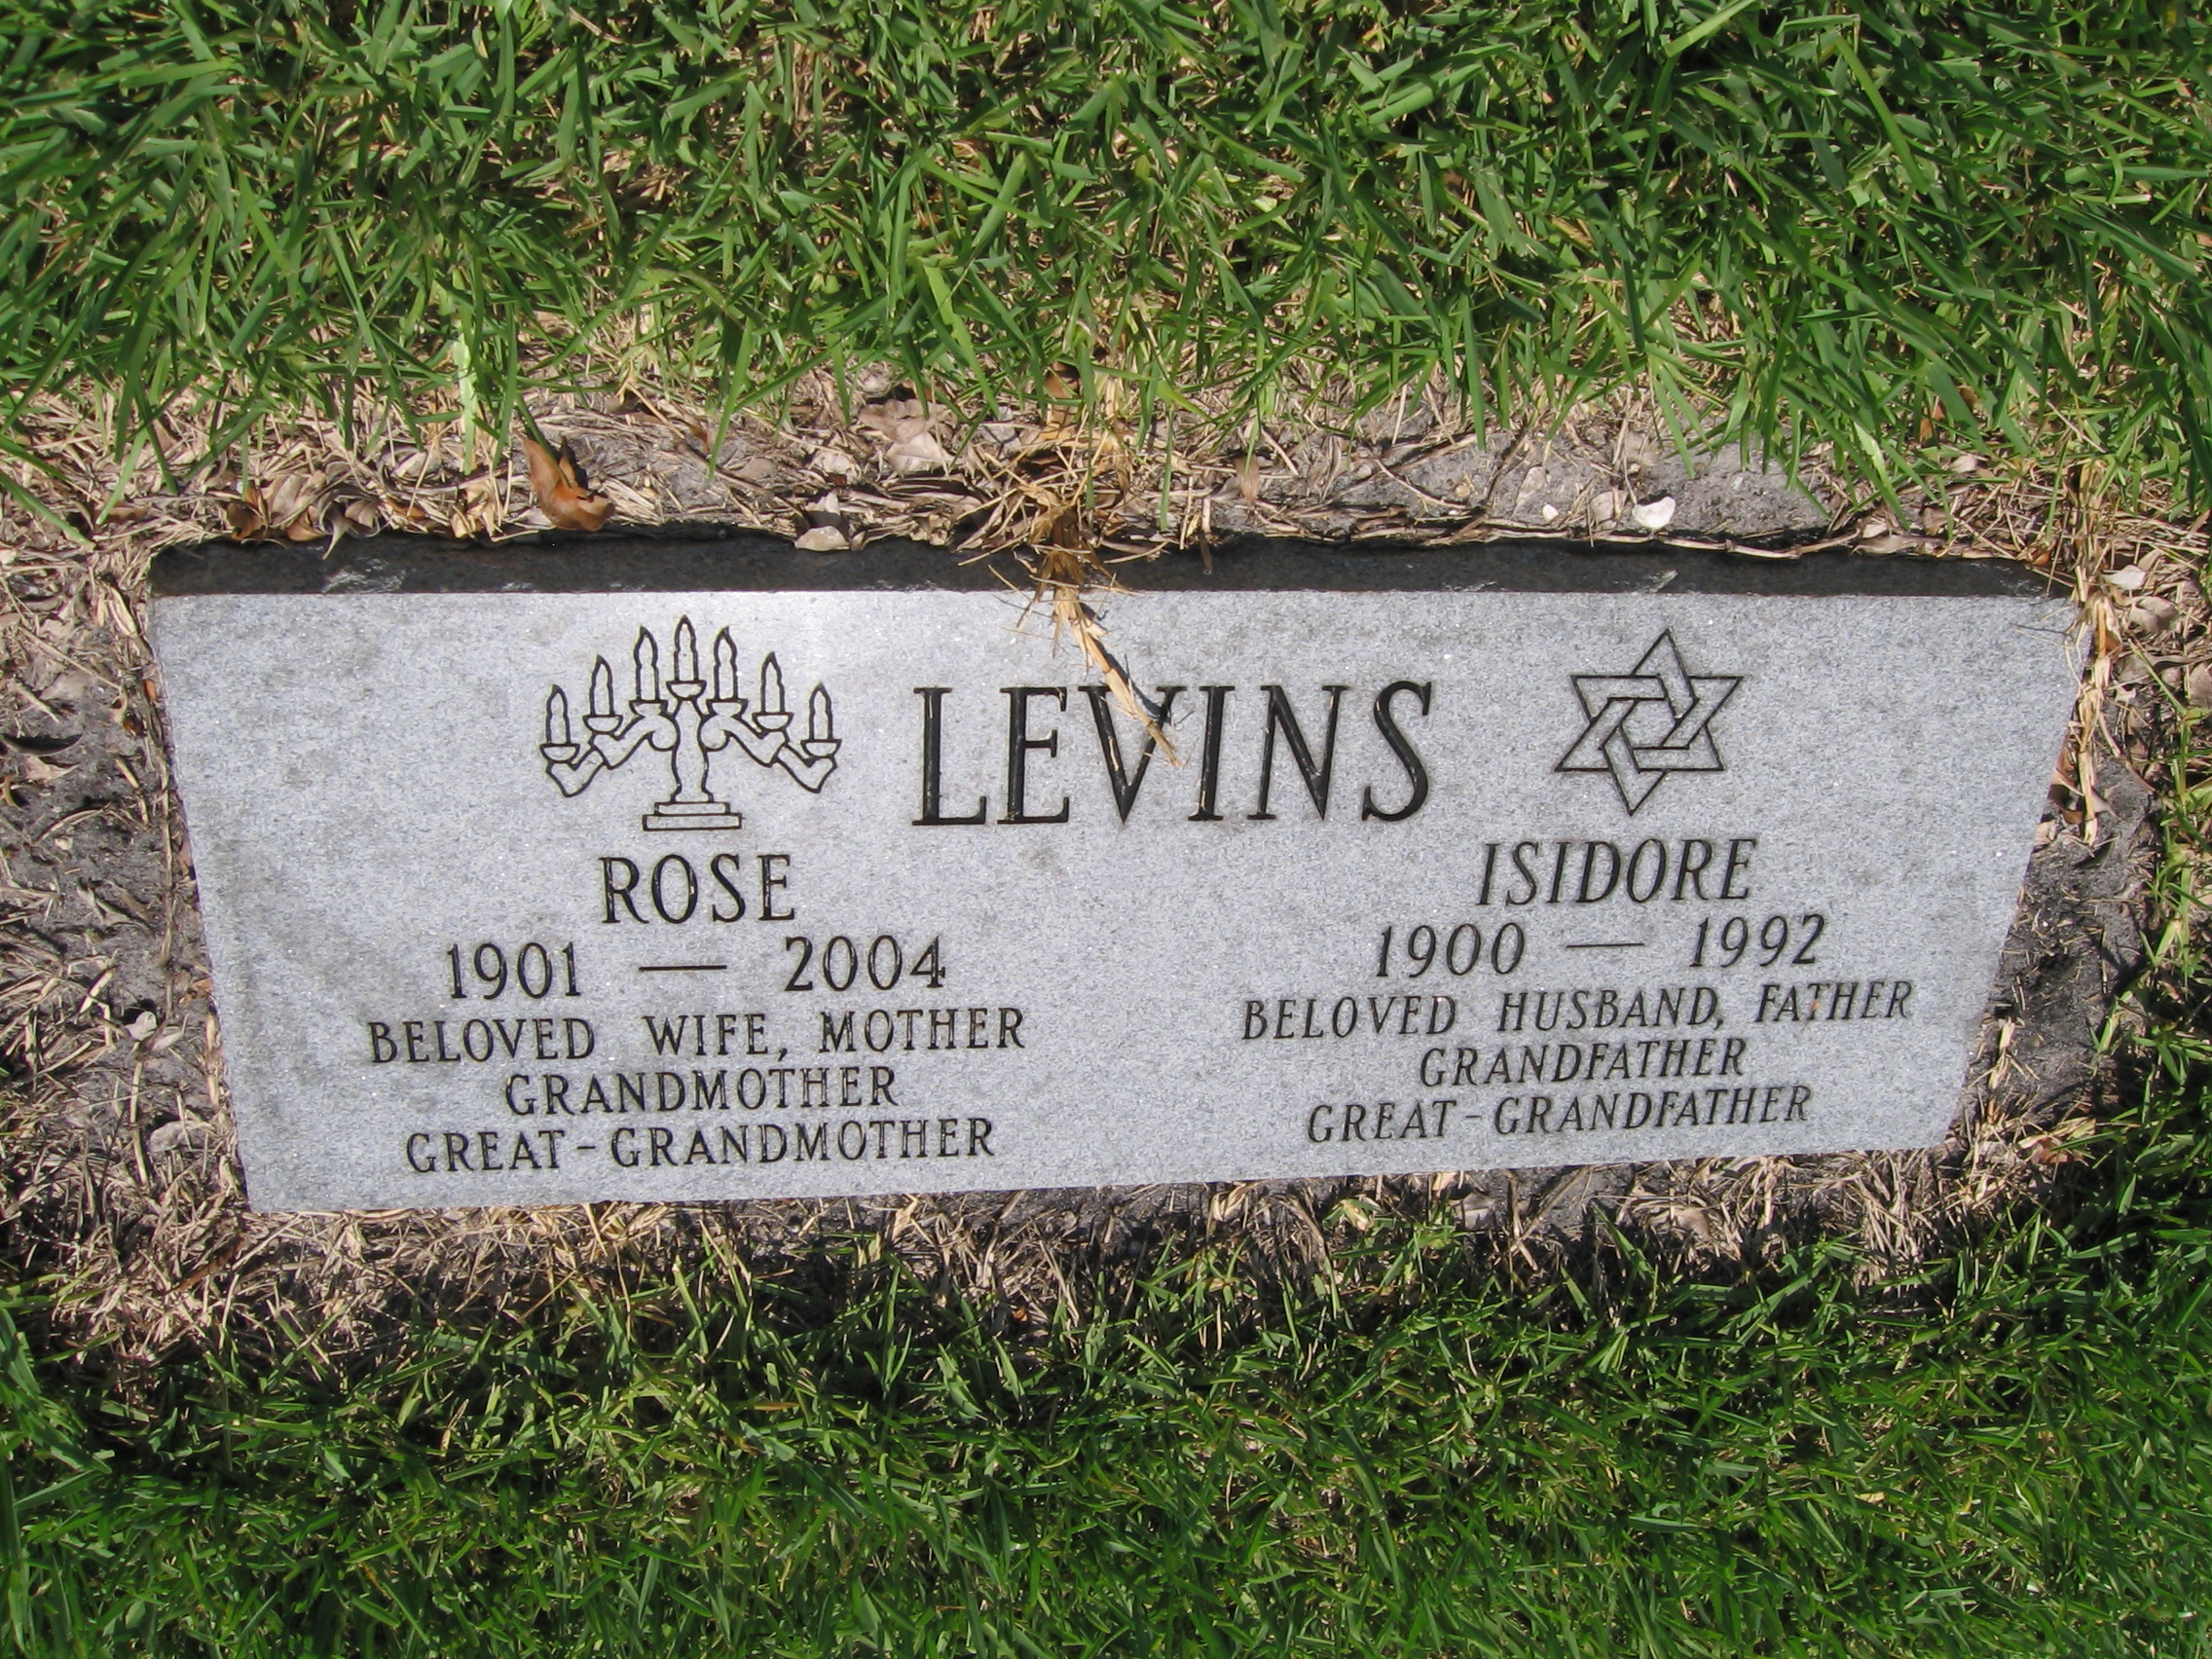 Rose Levins